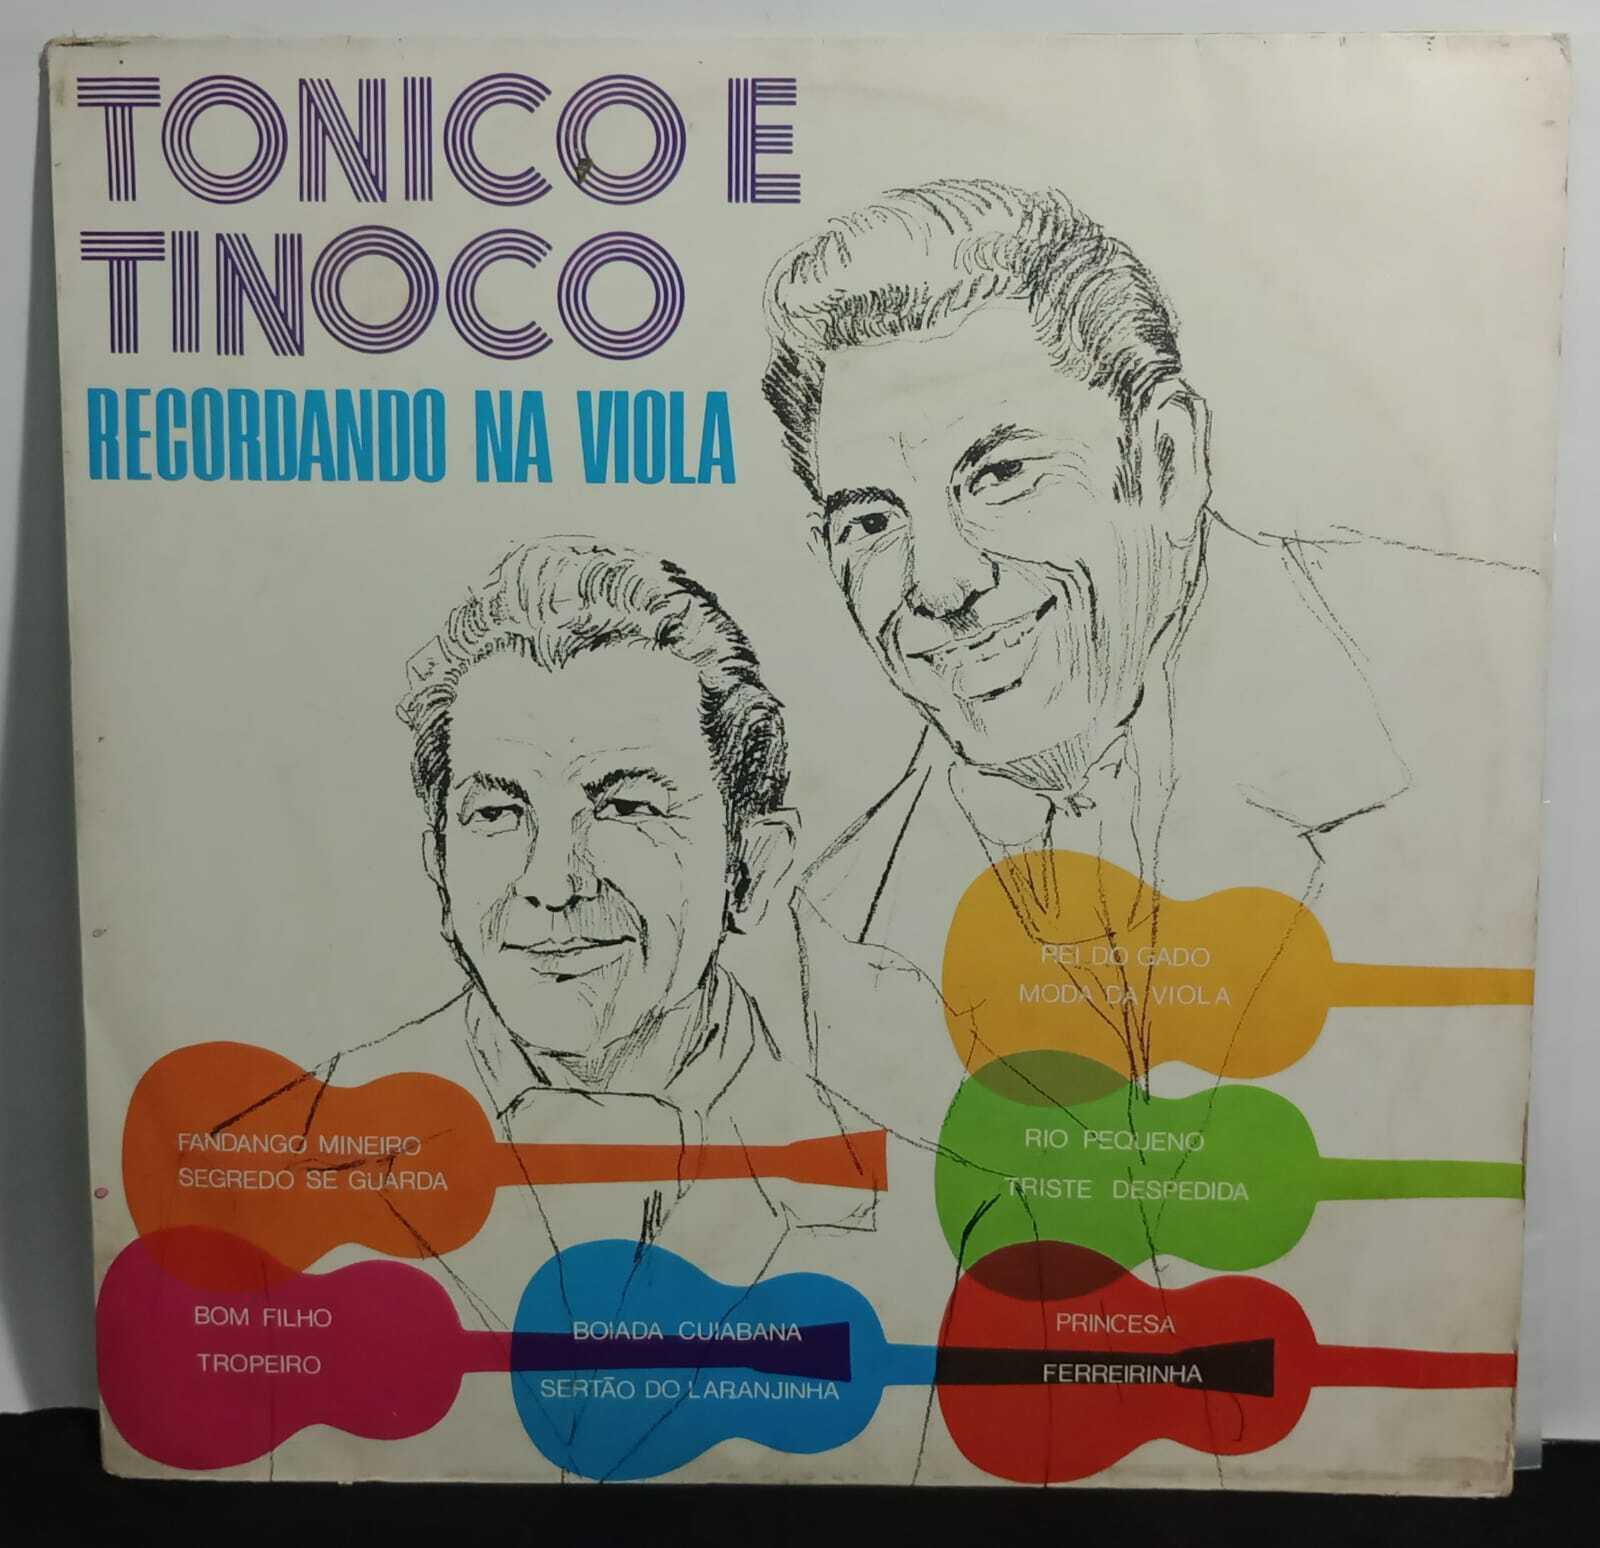 Vinil - Tonico E Tinoco - Recordando Na Viola